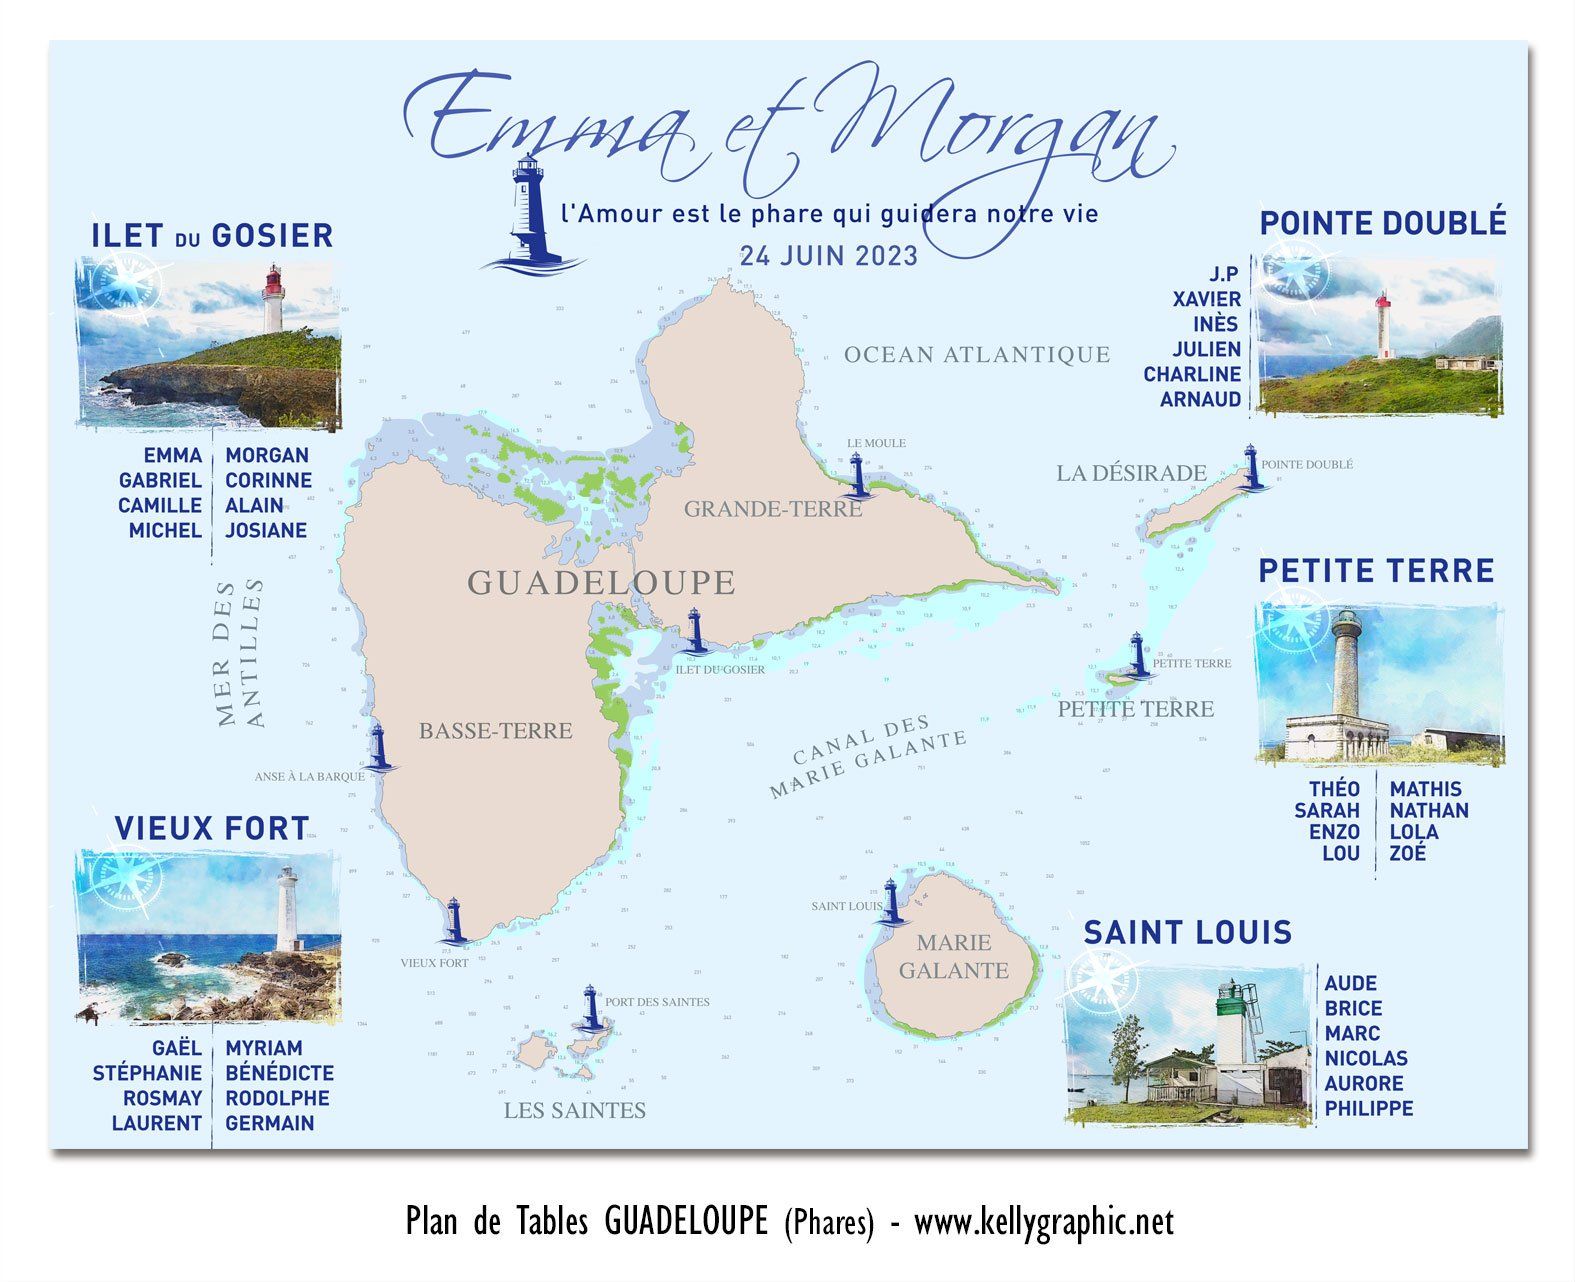 Plan de Tables Mariage Voyage Guadeloupe